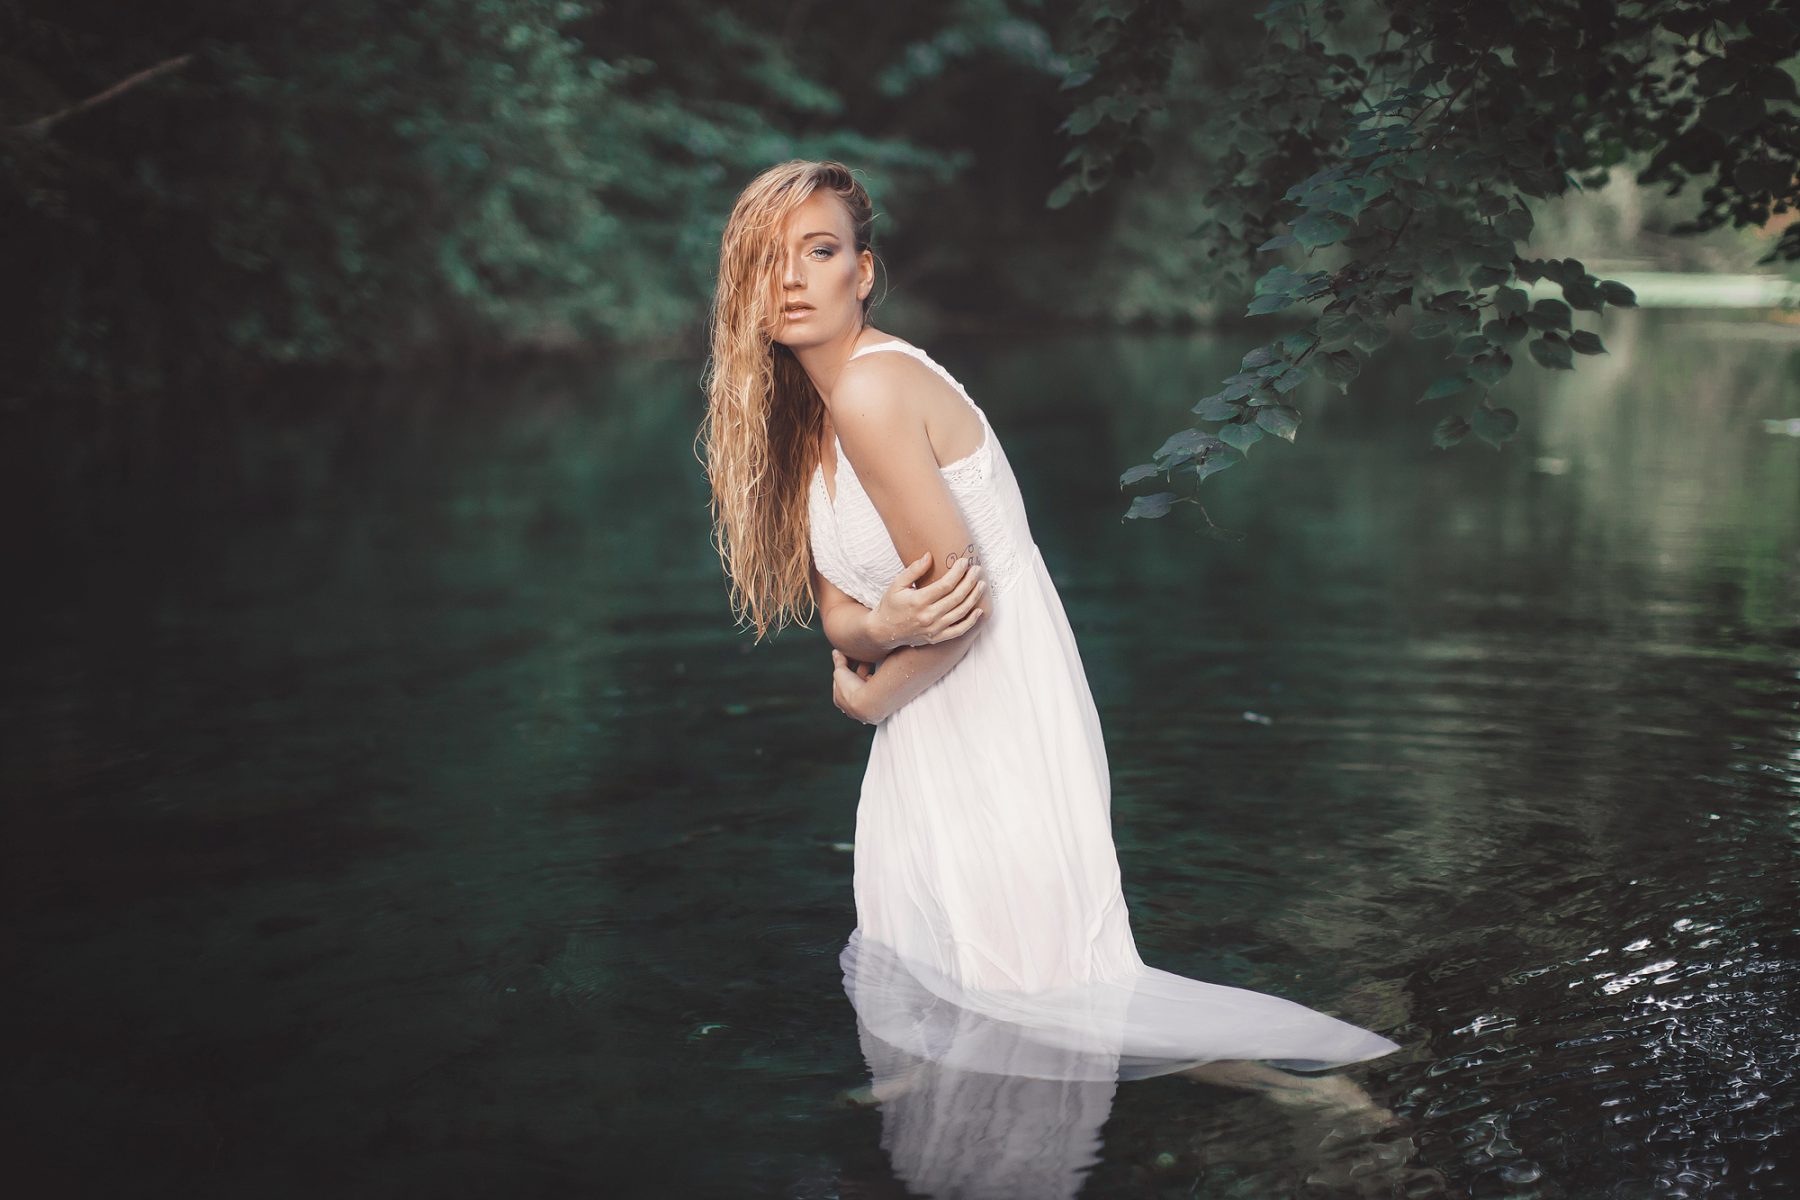 water-river-portrait-girl